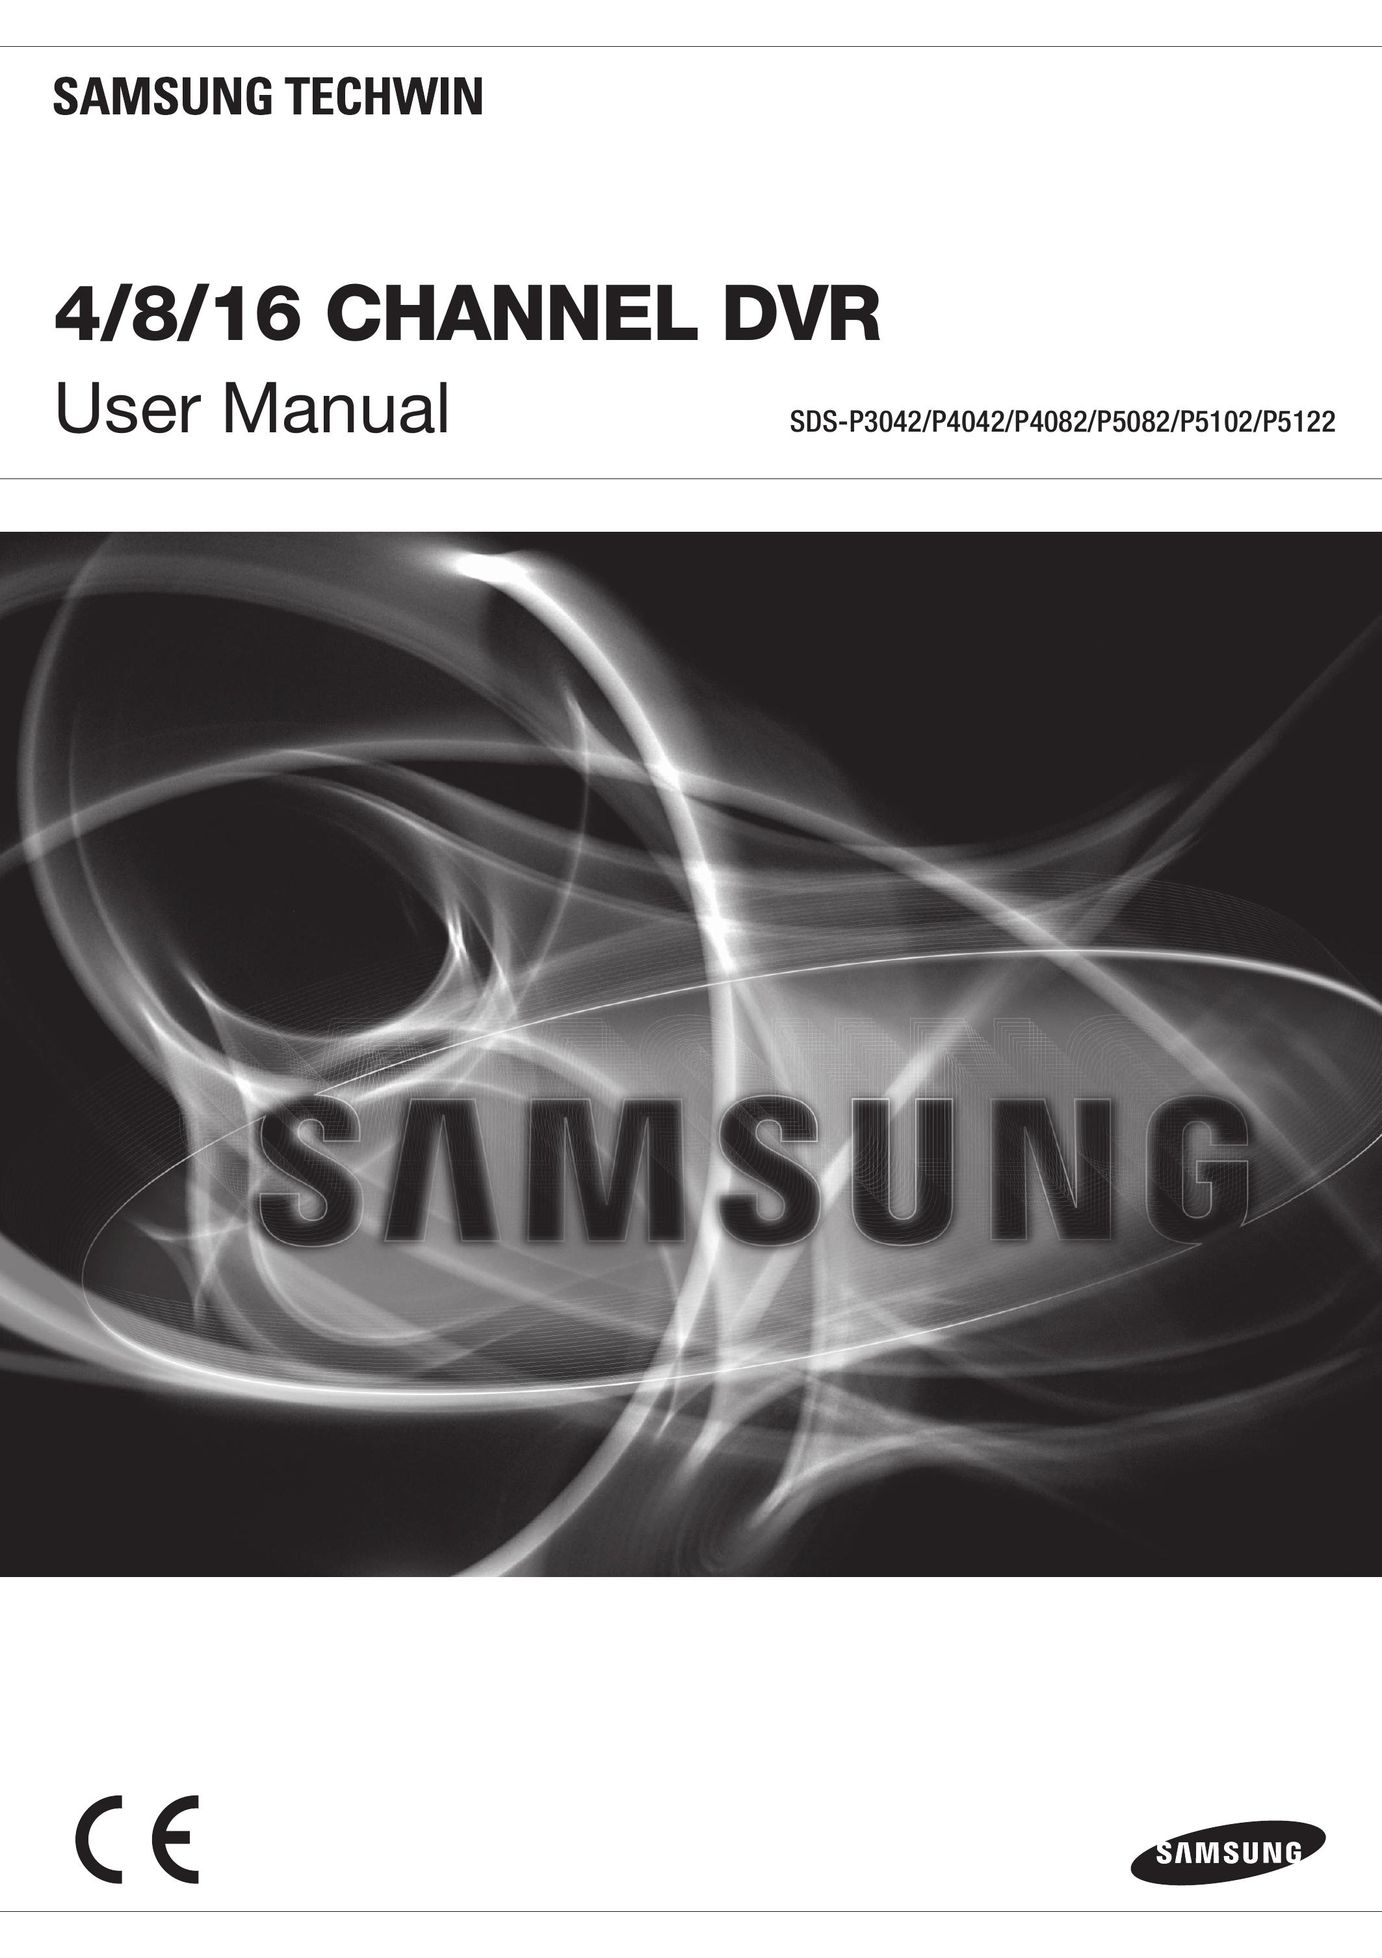 Samsung SDS-P5082 DVR User Manual